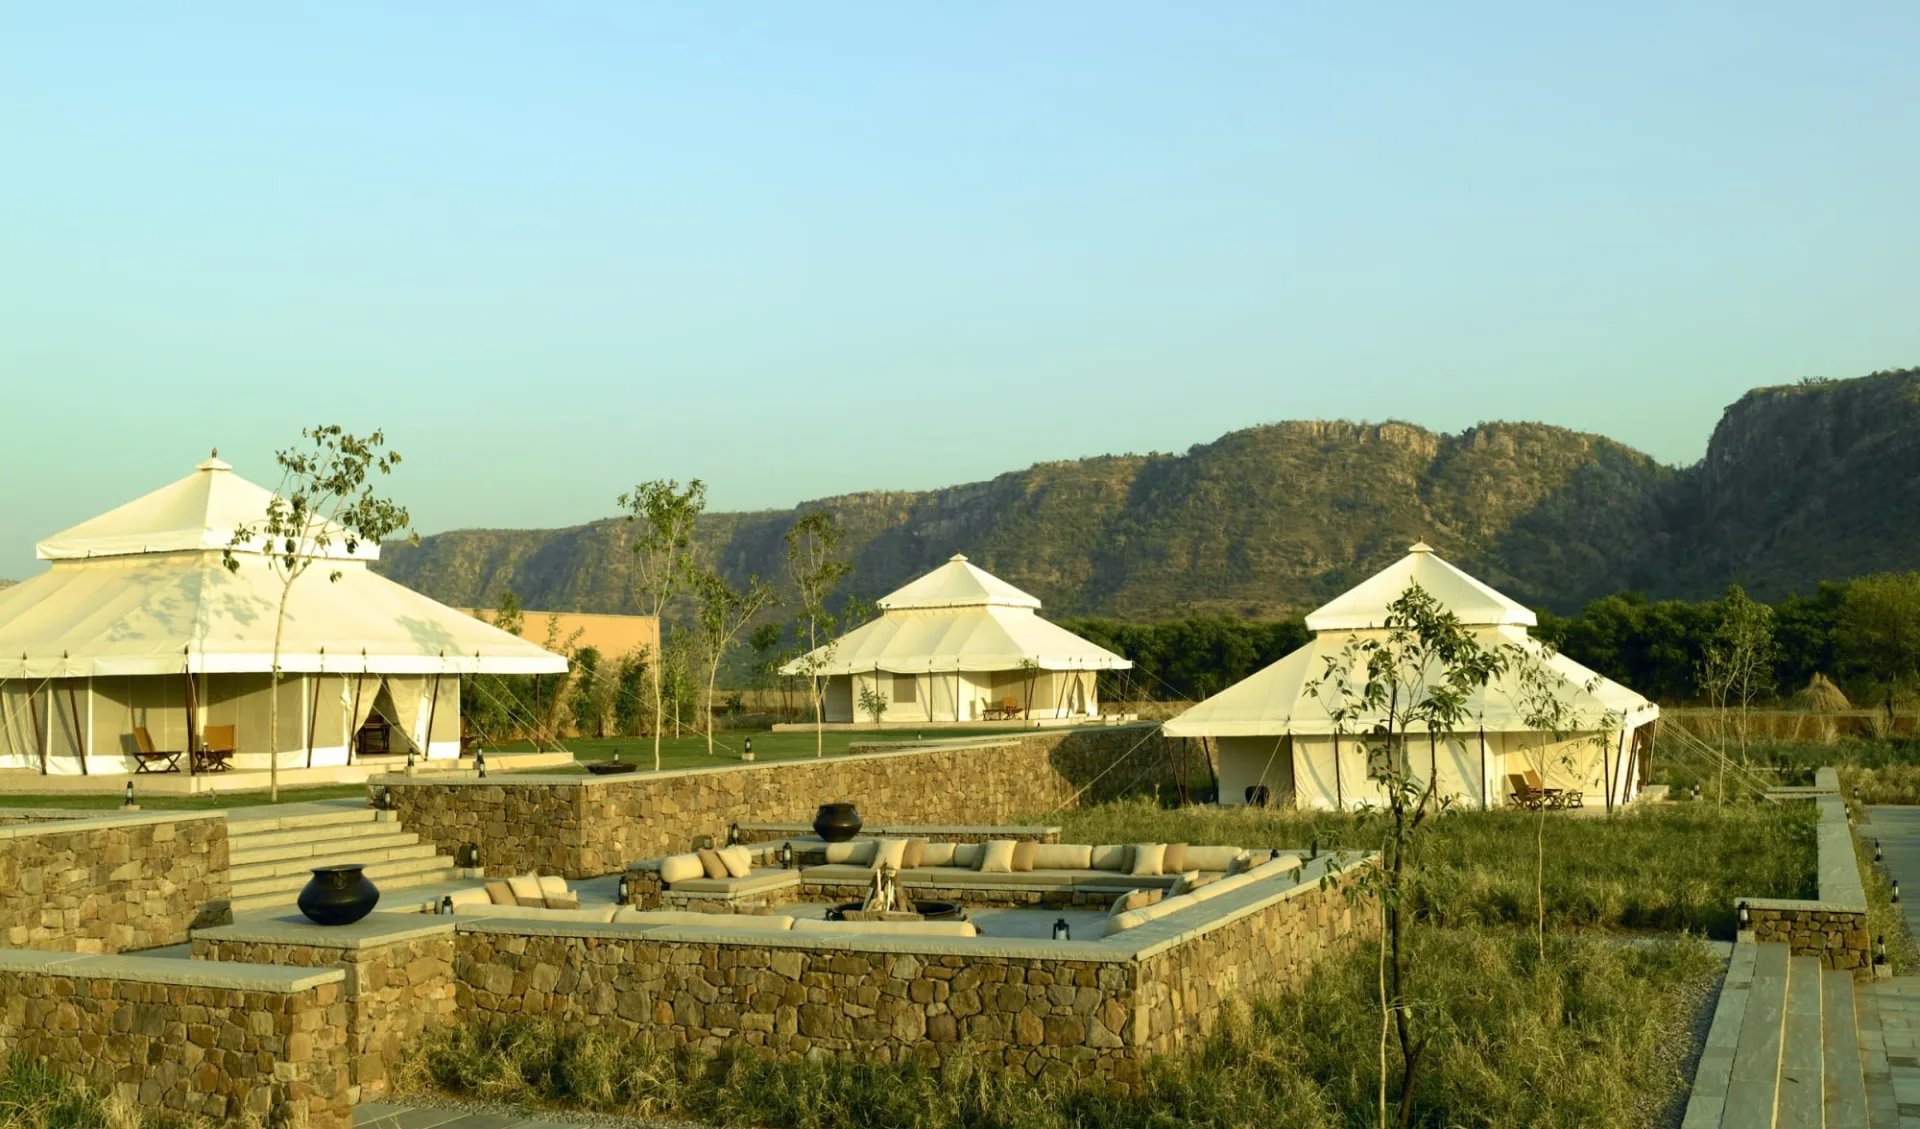 Aman-i-Khas in Ranthambore: tents and aravalli hills